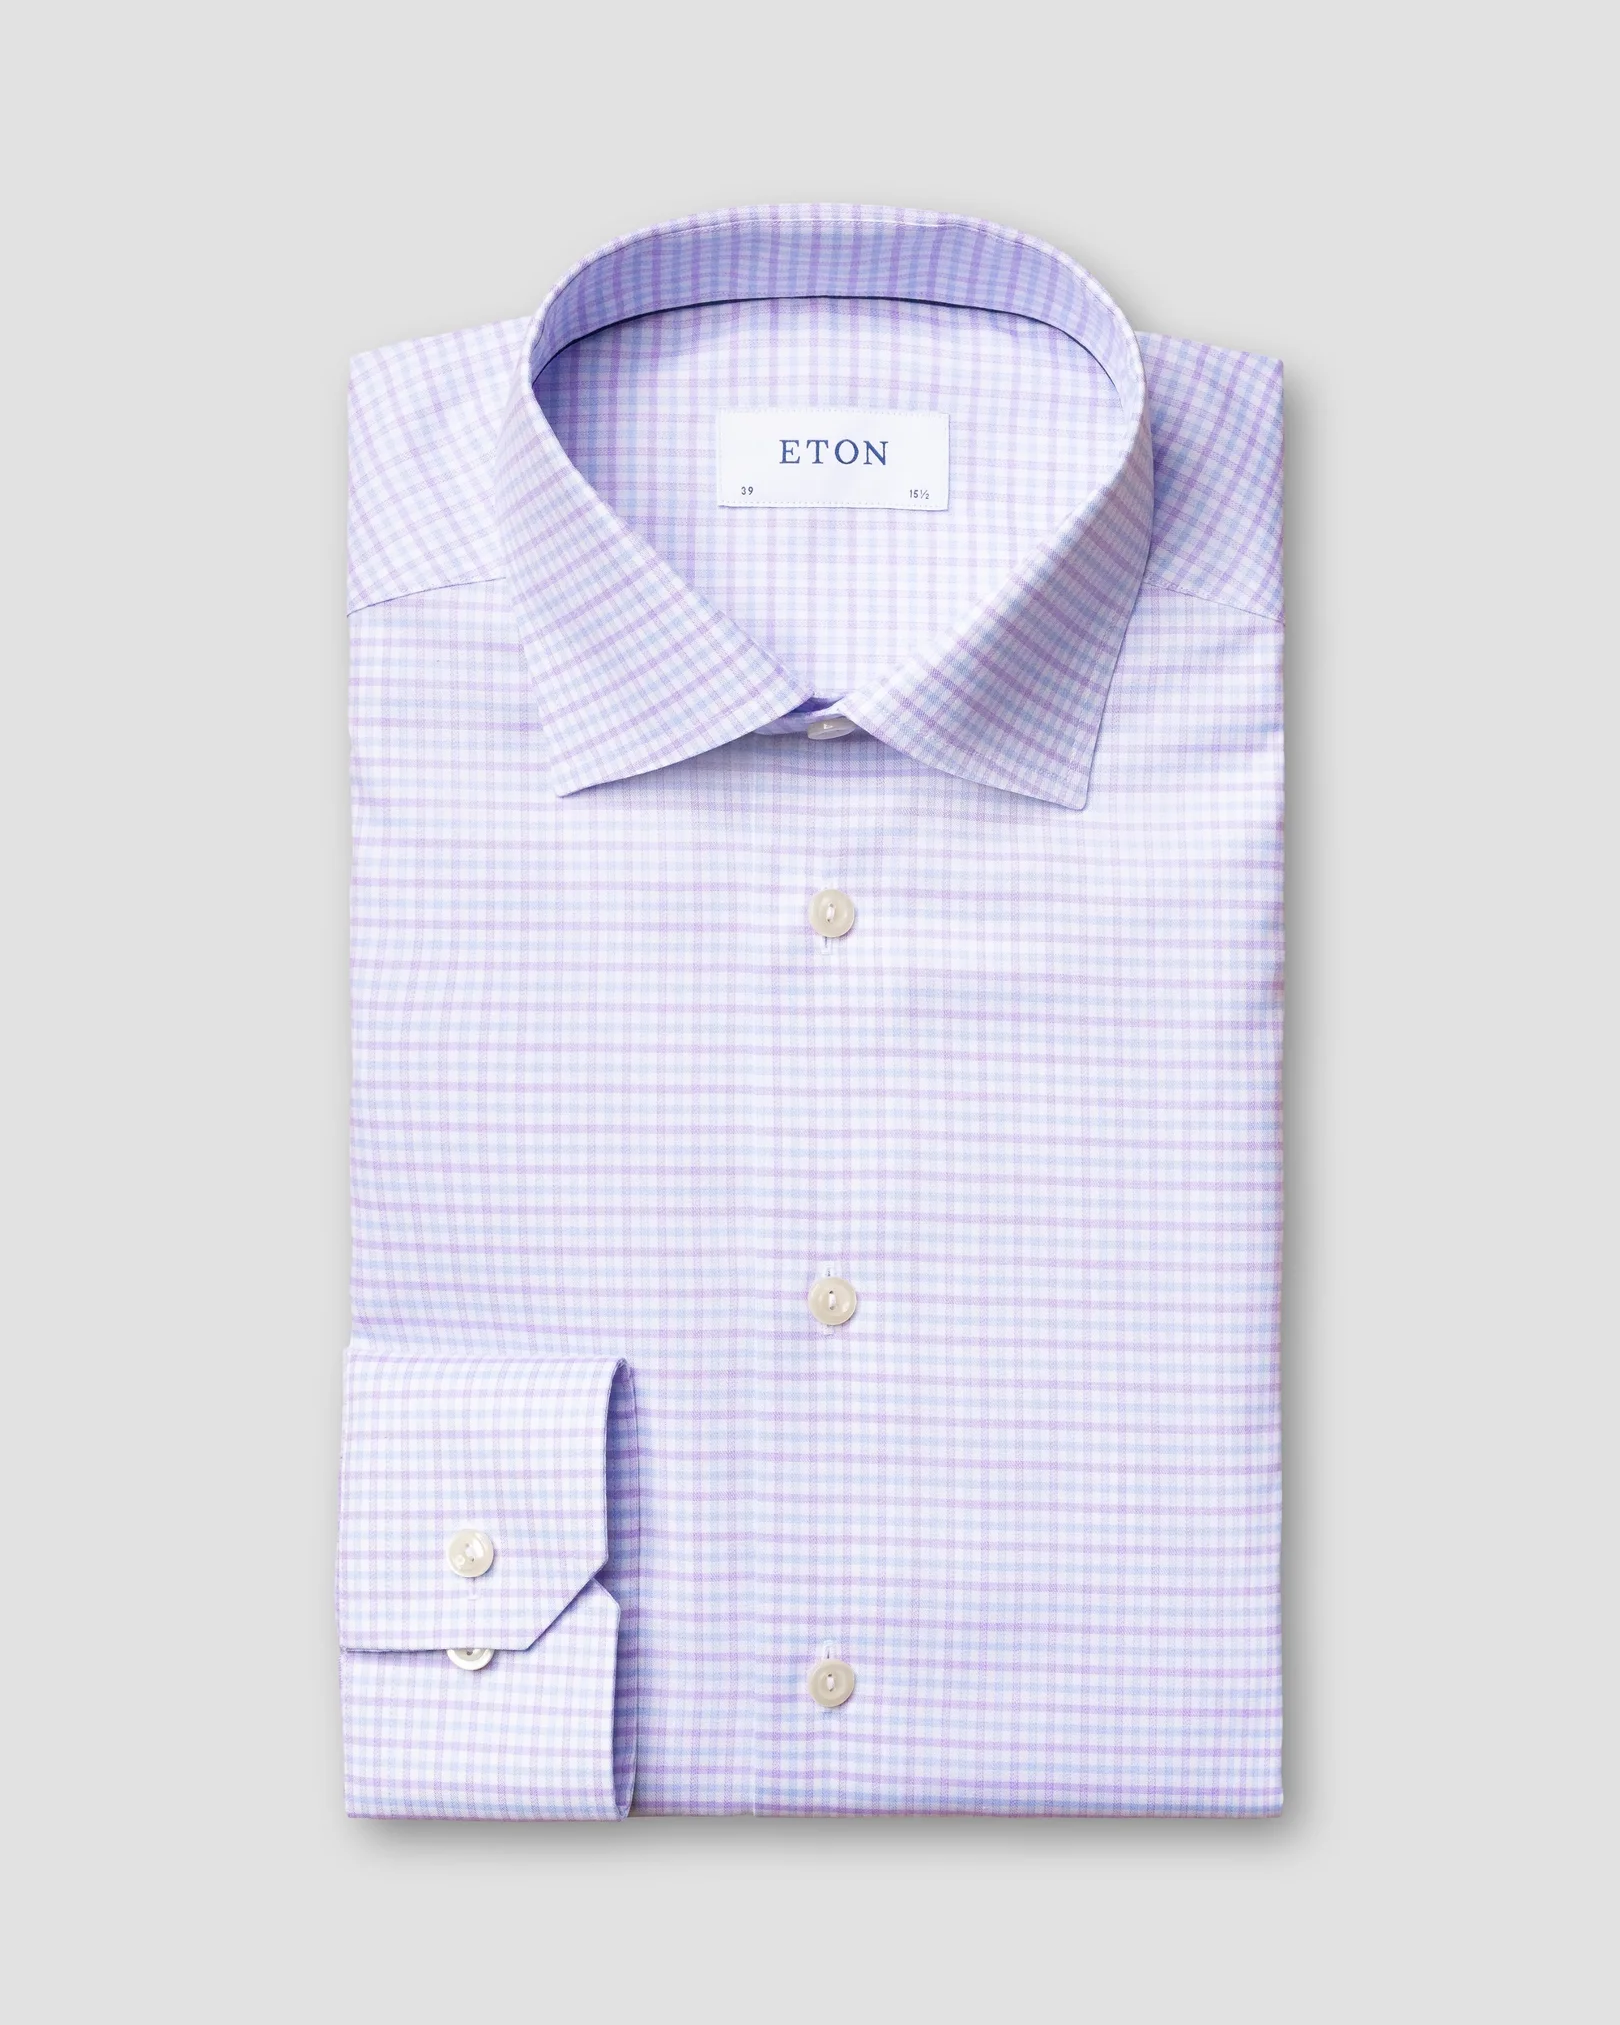 Eton - lavender and blue 3 color check shirt